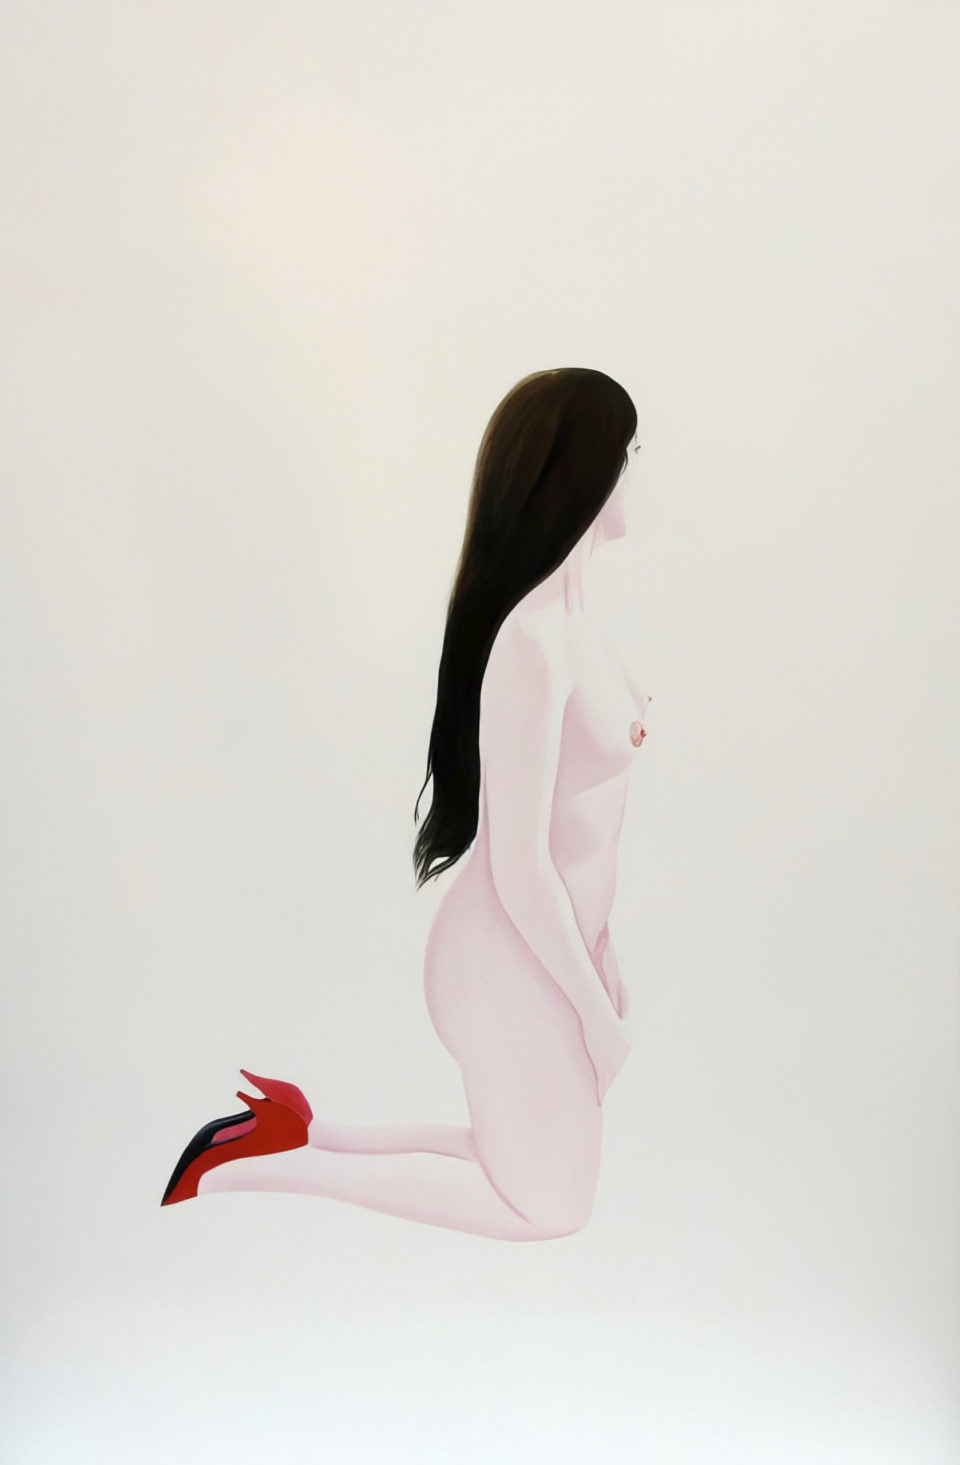 Jeanne huile et glycero sur toile oil and glycero on canvas 195x130 cm